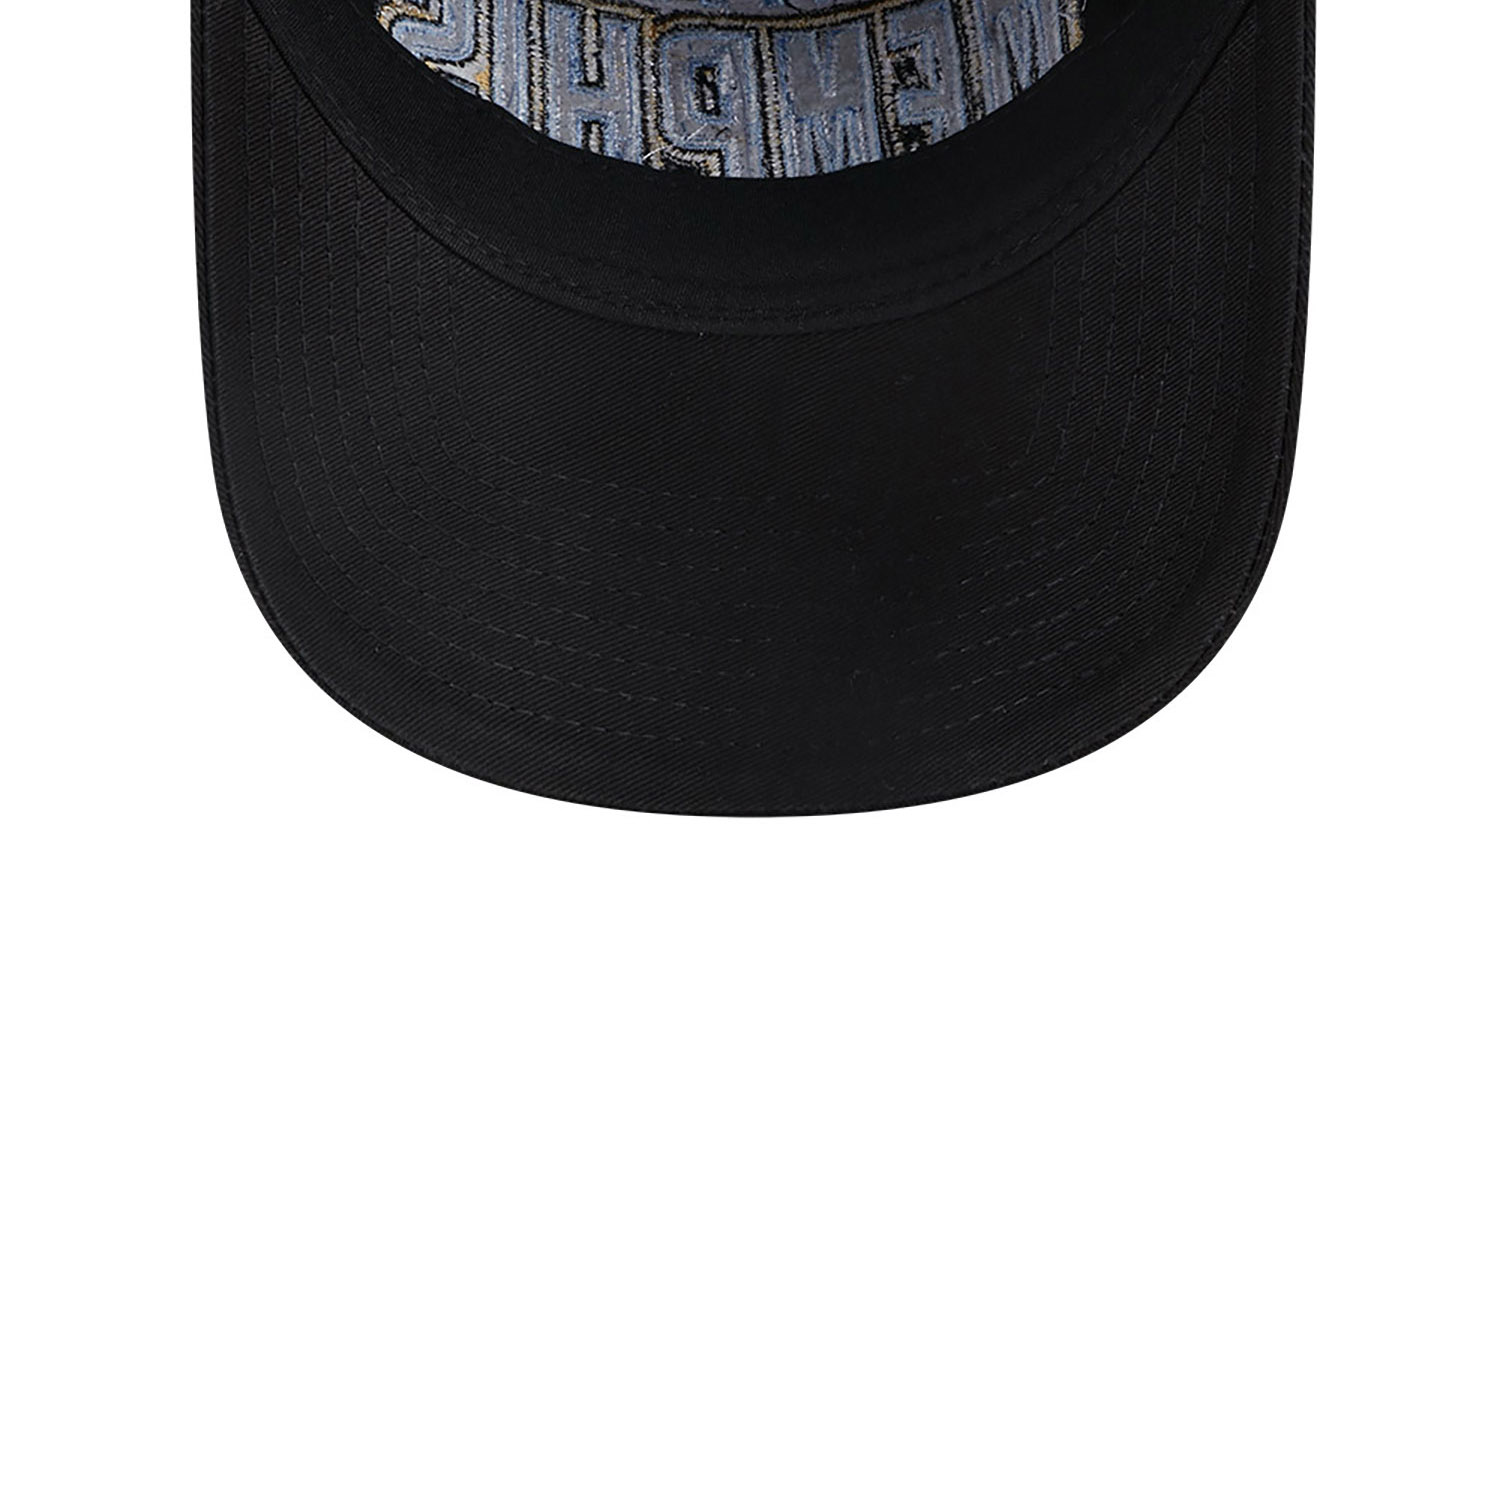 Memphis Grizzlies Authentics City Edition Black 9TWENTY Adjustable Cap